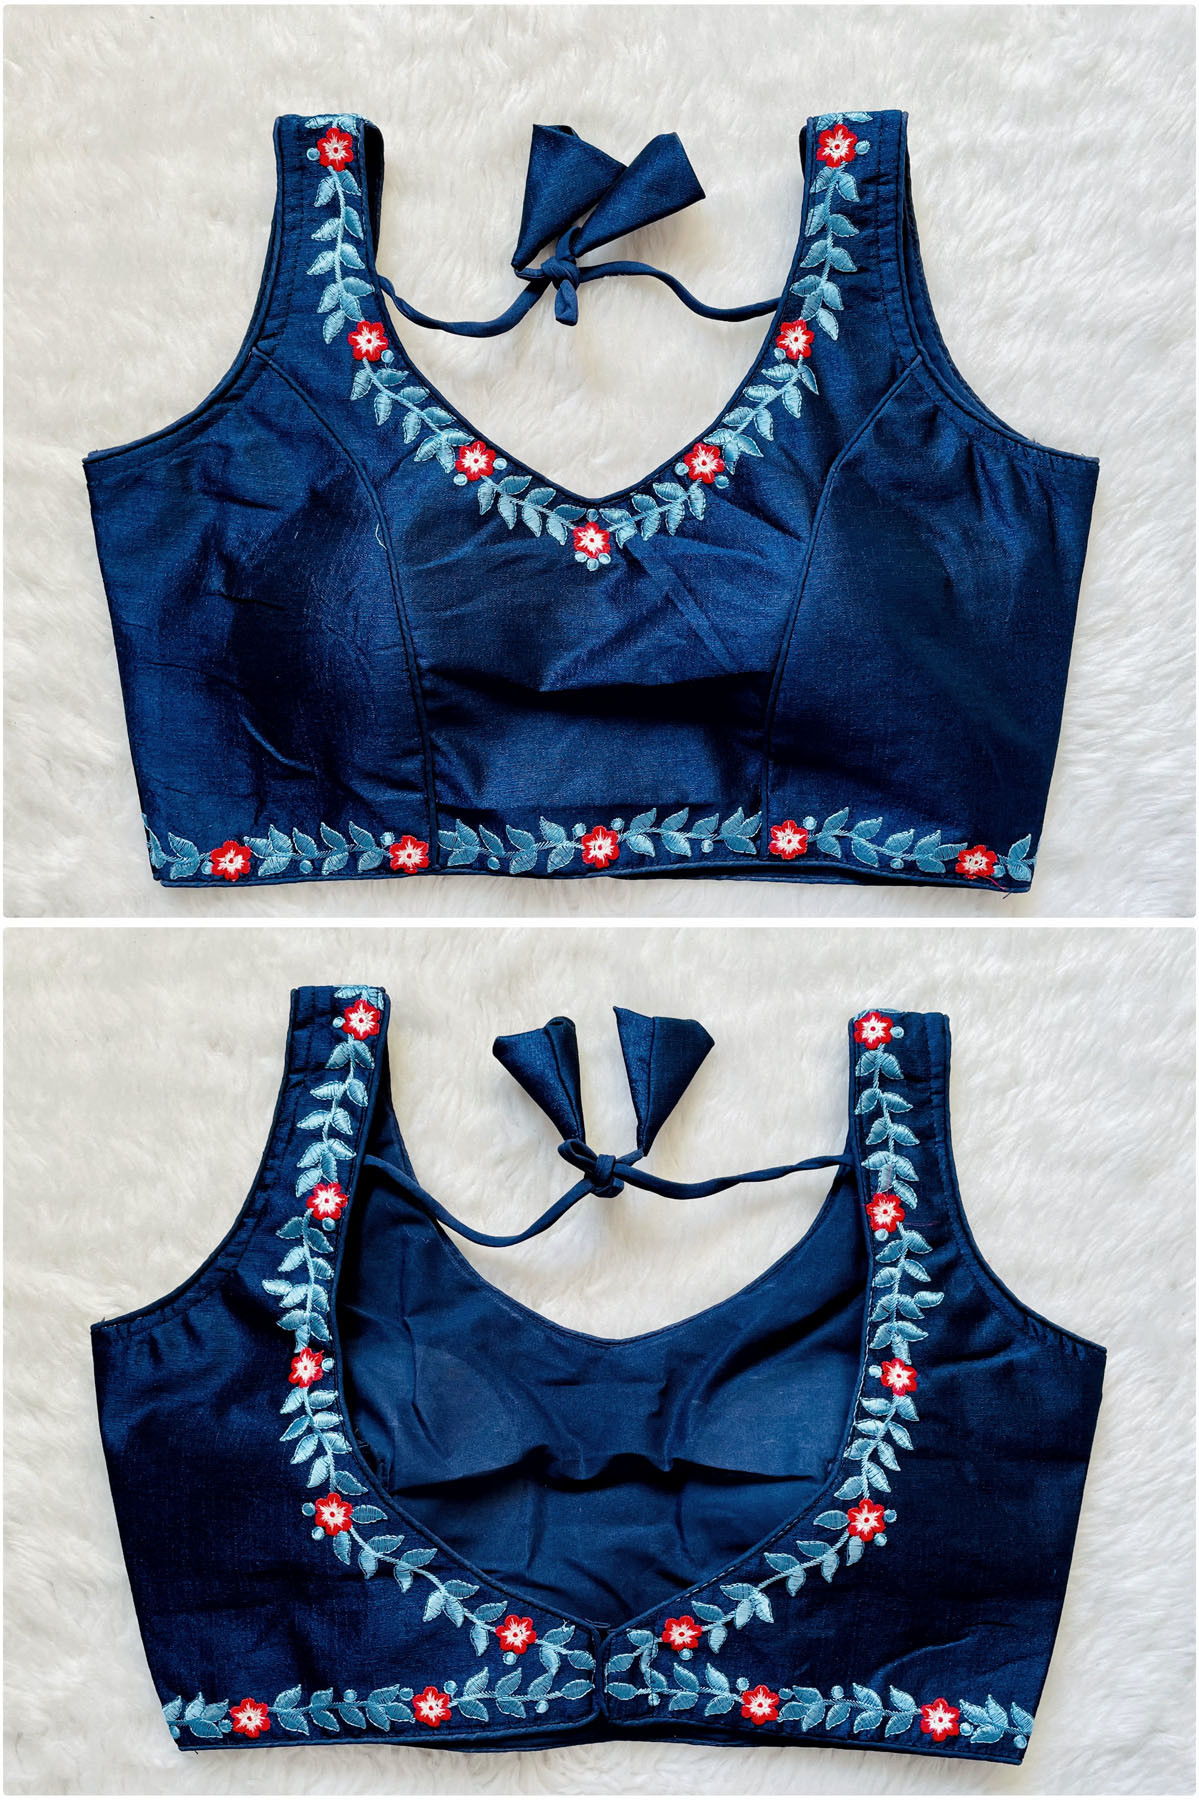 Embroidered Phantom Silk Designer Blouse - Navy Blue(3XL)